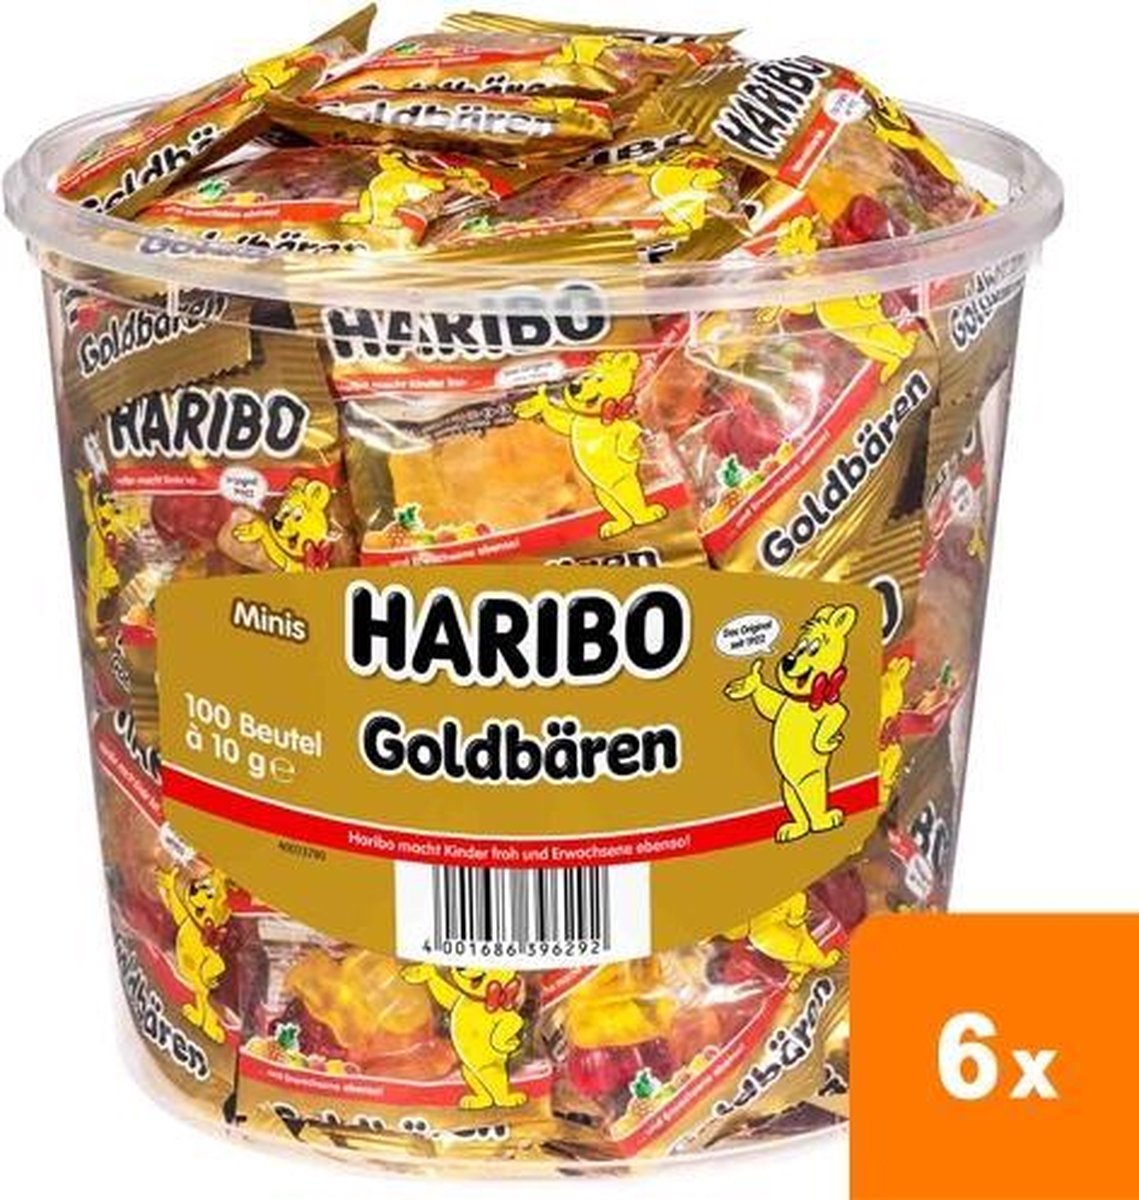 Haribo goudberen mini snoepzakjes - 100 stuks | bol.com